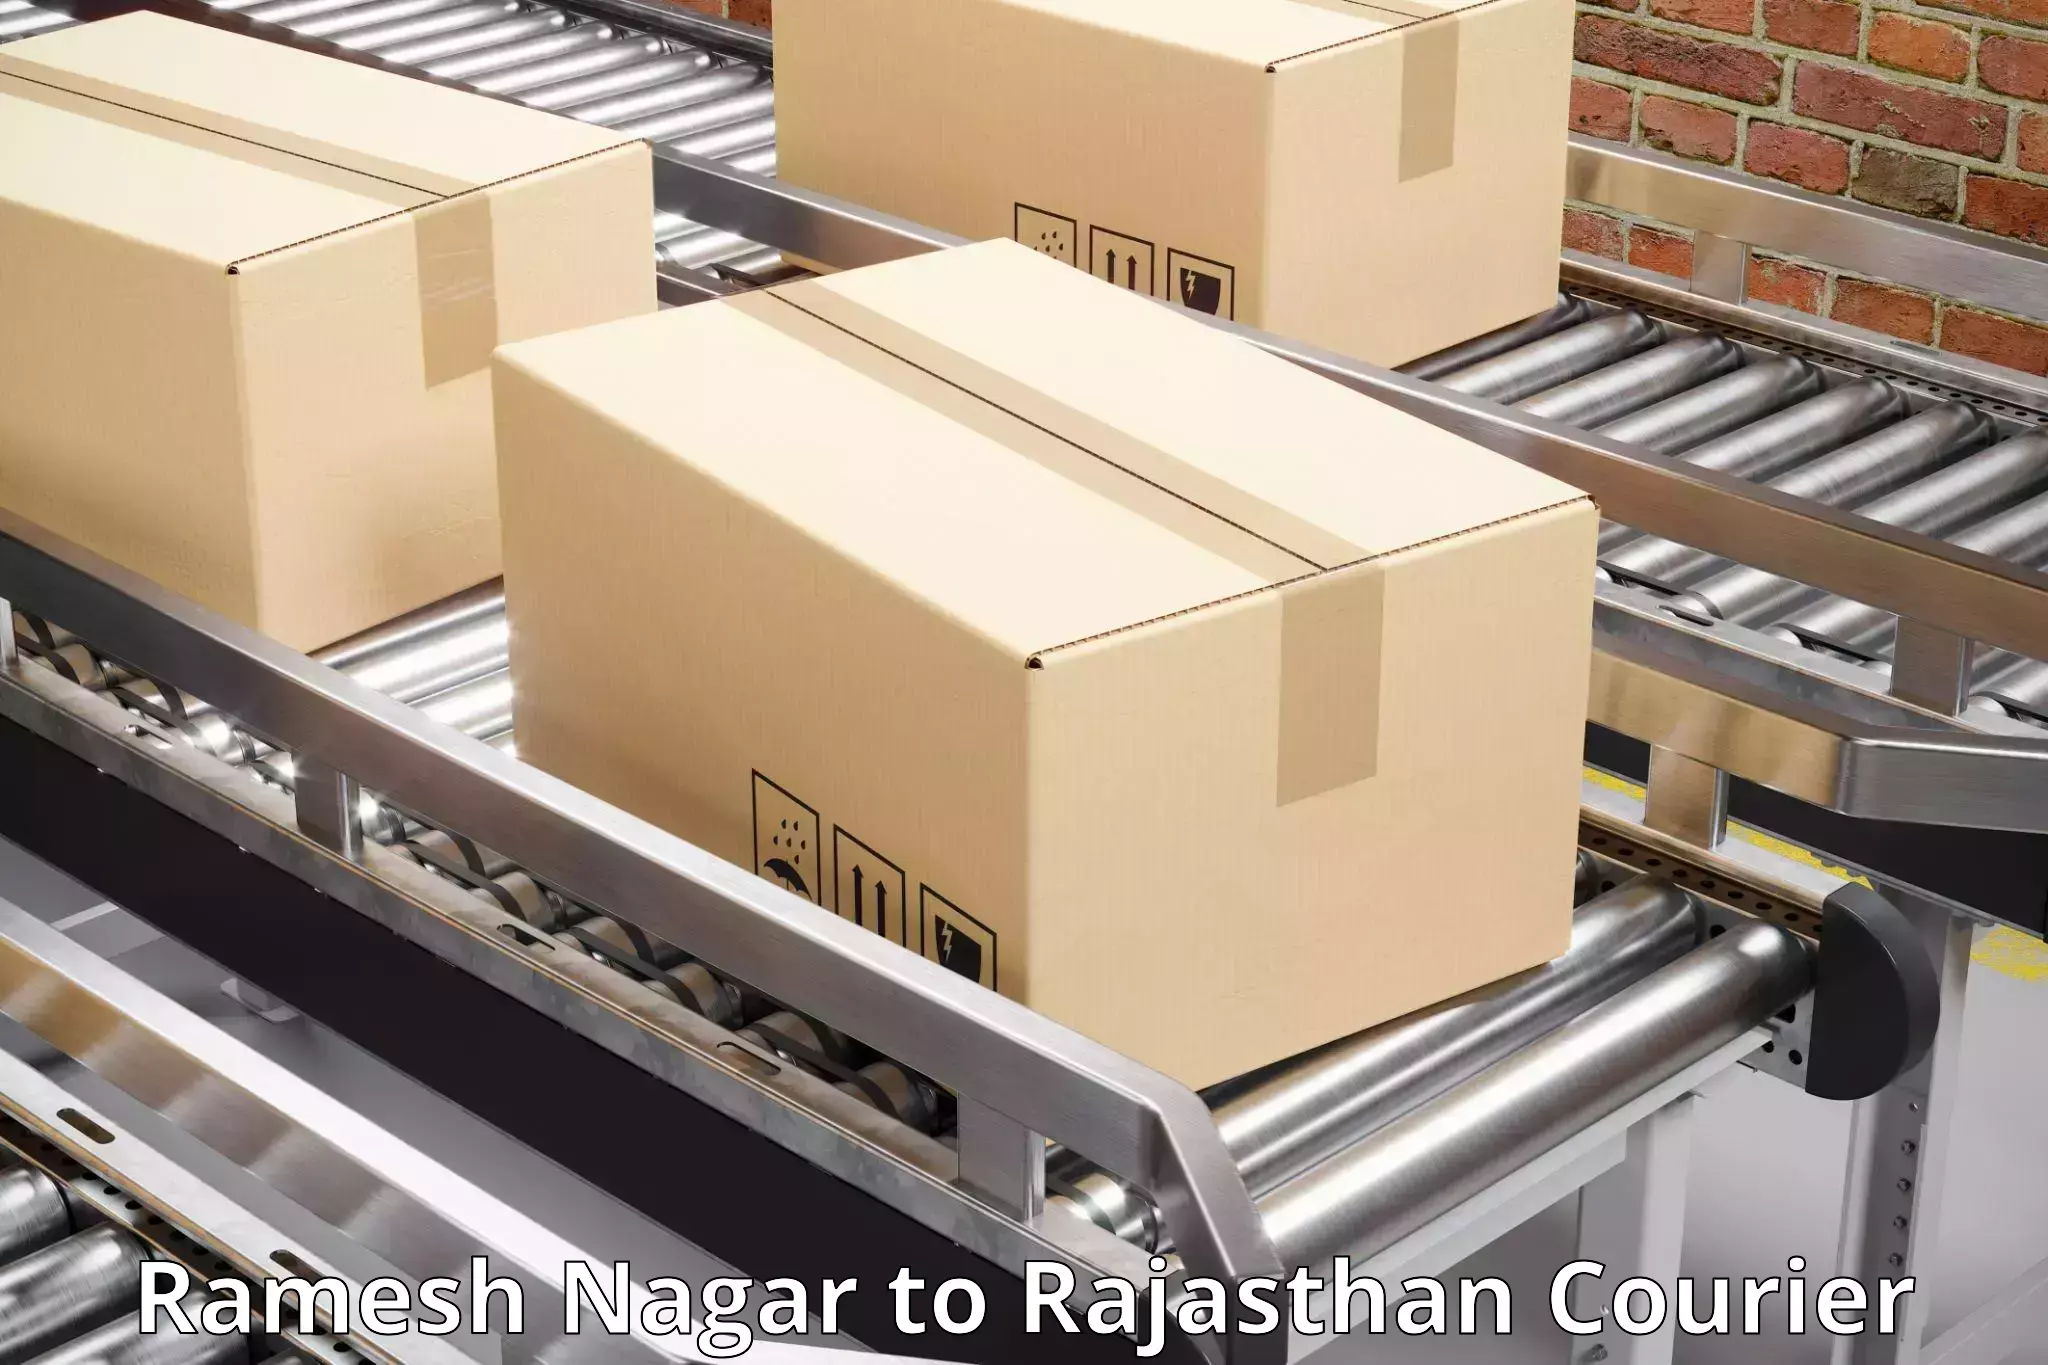 Courier service comparison Ramesh Nagar to Kherli